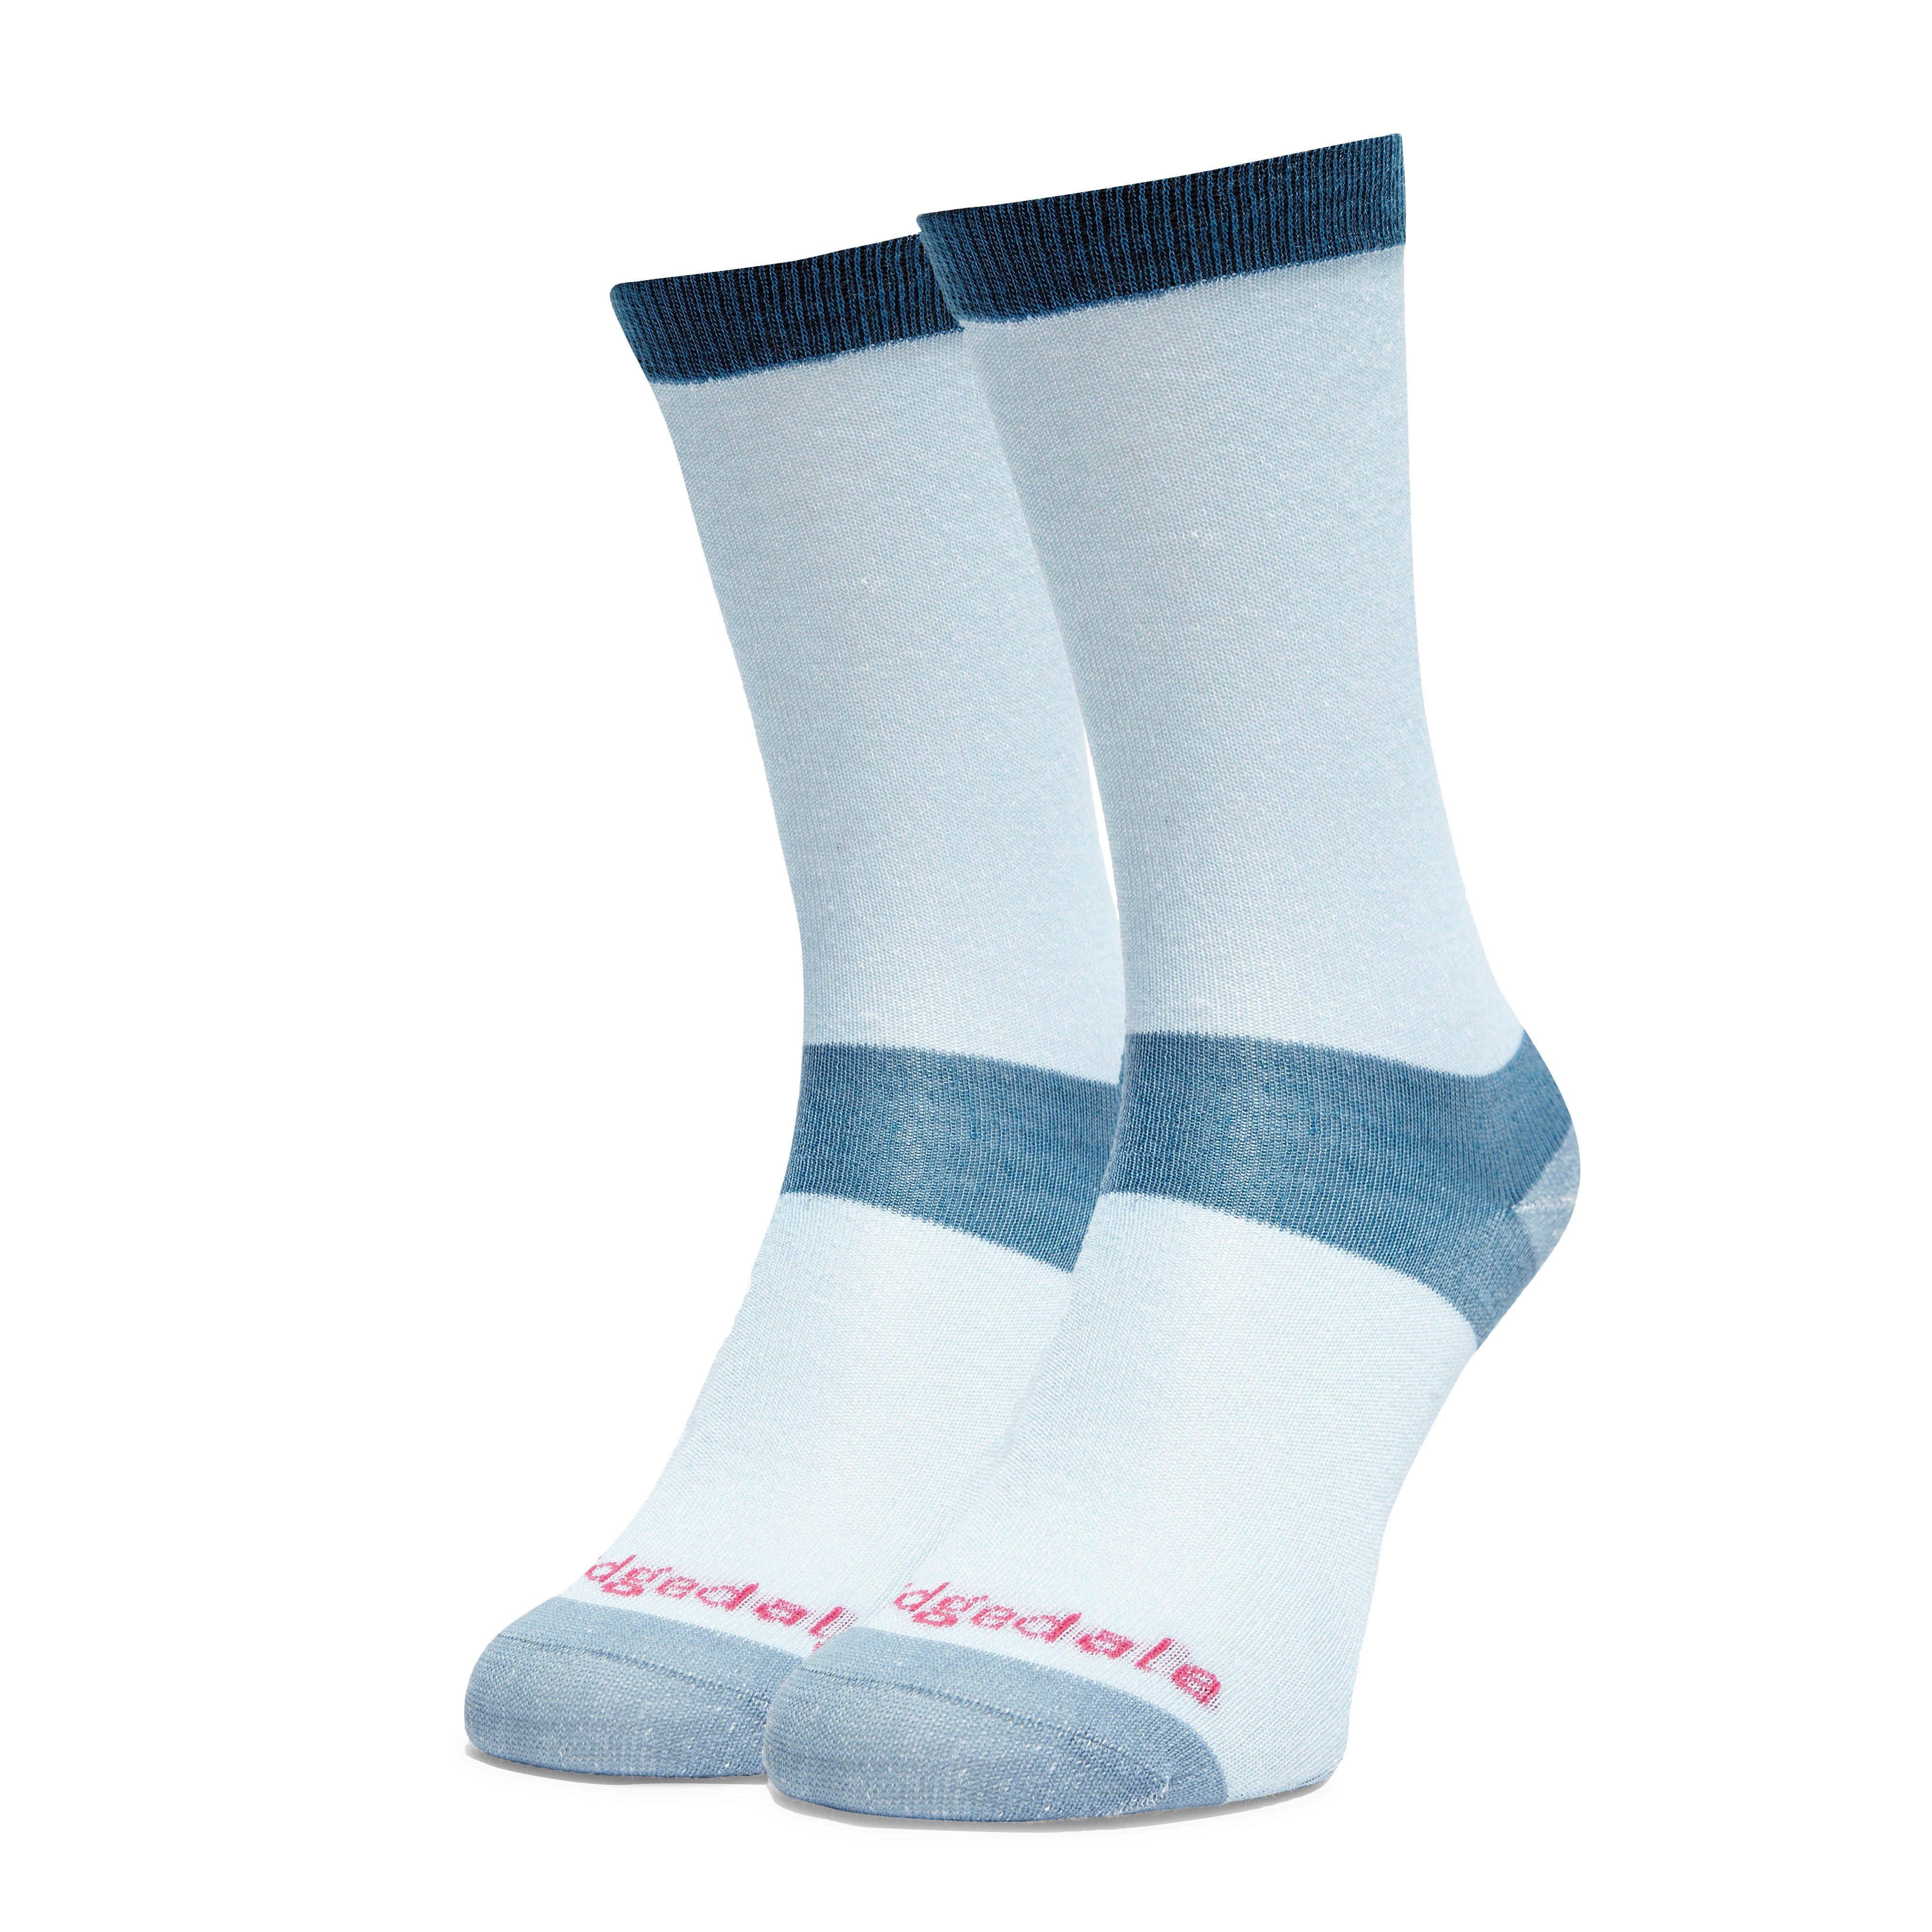 Bridgedale Women's Base Layer Coolmax Liner Boot Socks (2 Pairs) Review